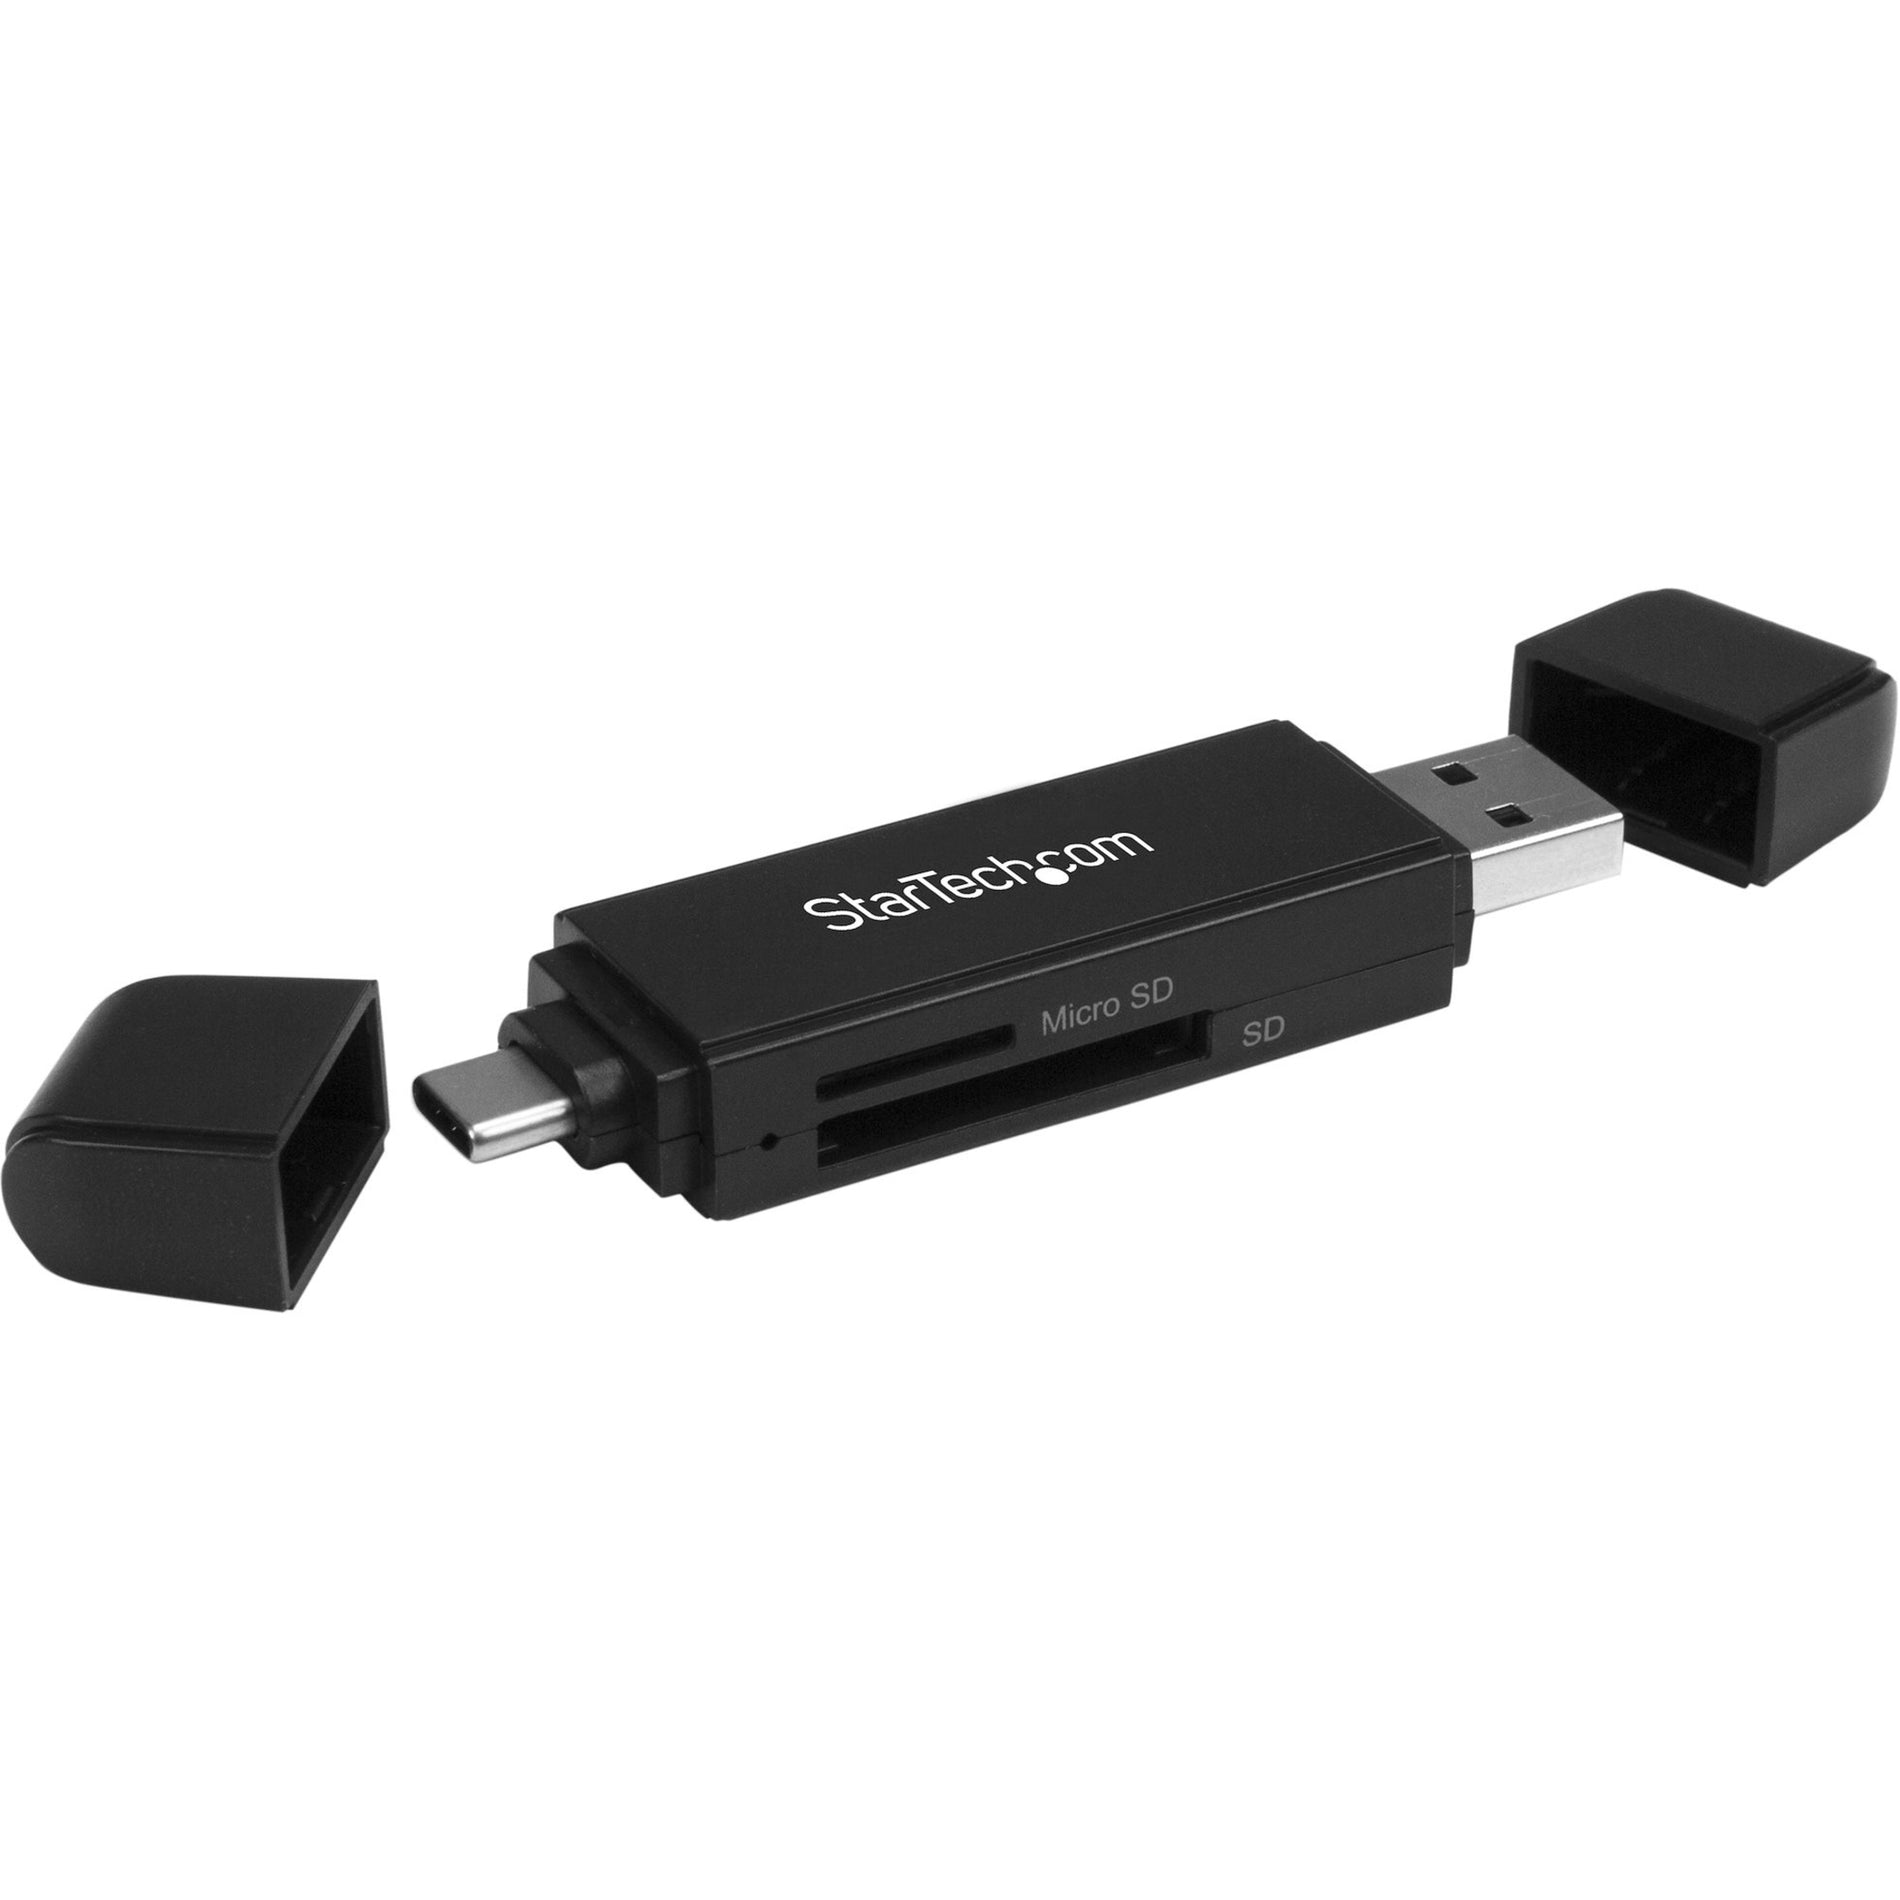 StarTech.com SDMSDRWU3AC Flash Reader USB 3.0 (5Gbps), USB-C and USB-A, SD and microSD Card Reader